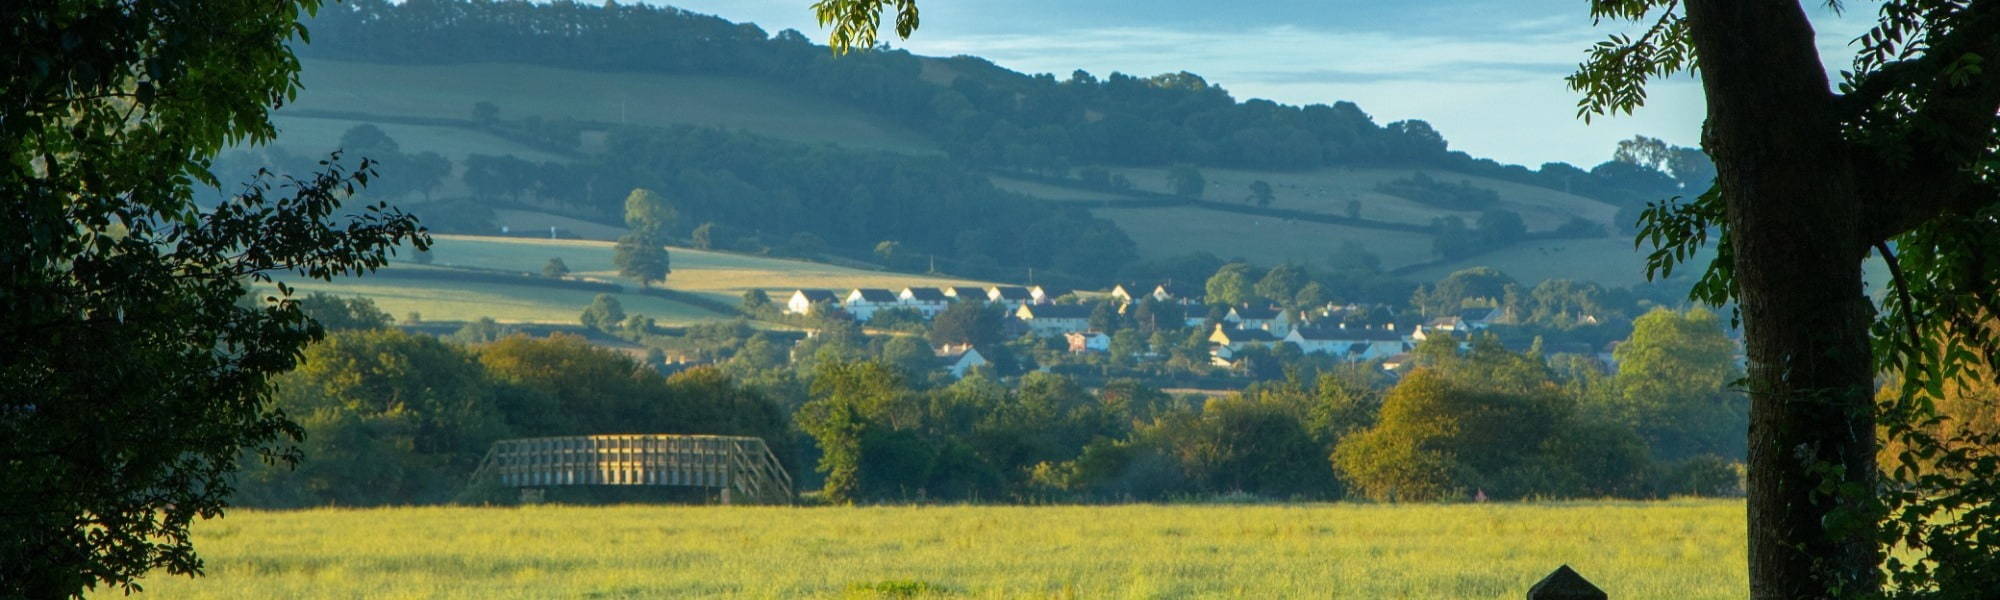 Farmland near town of Axminster in East Devon, UK.